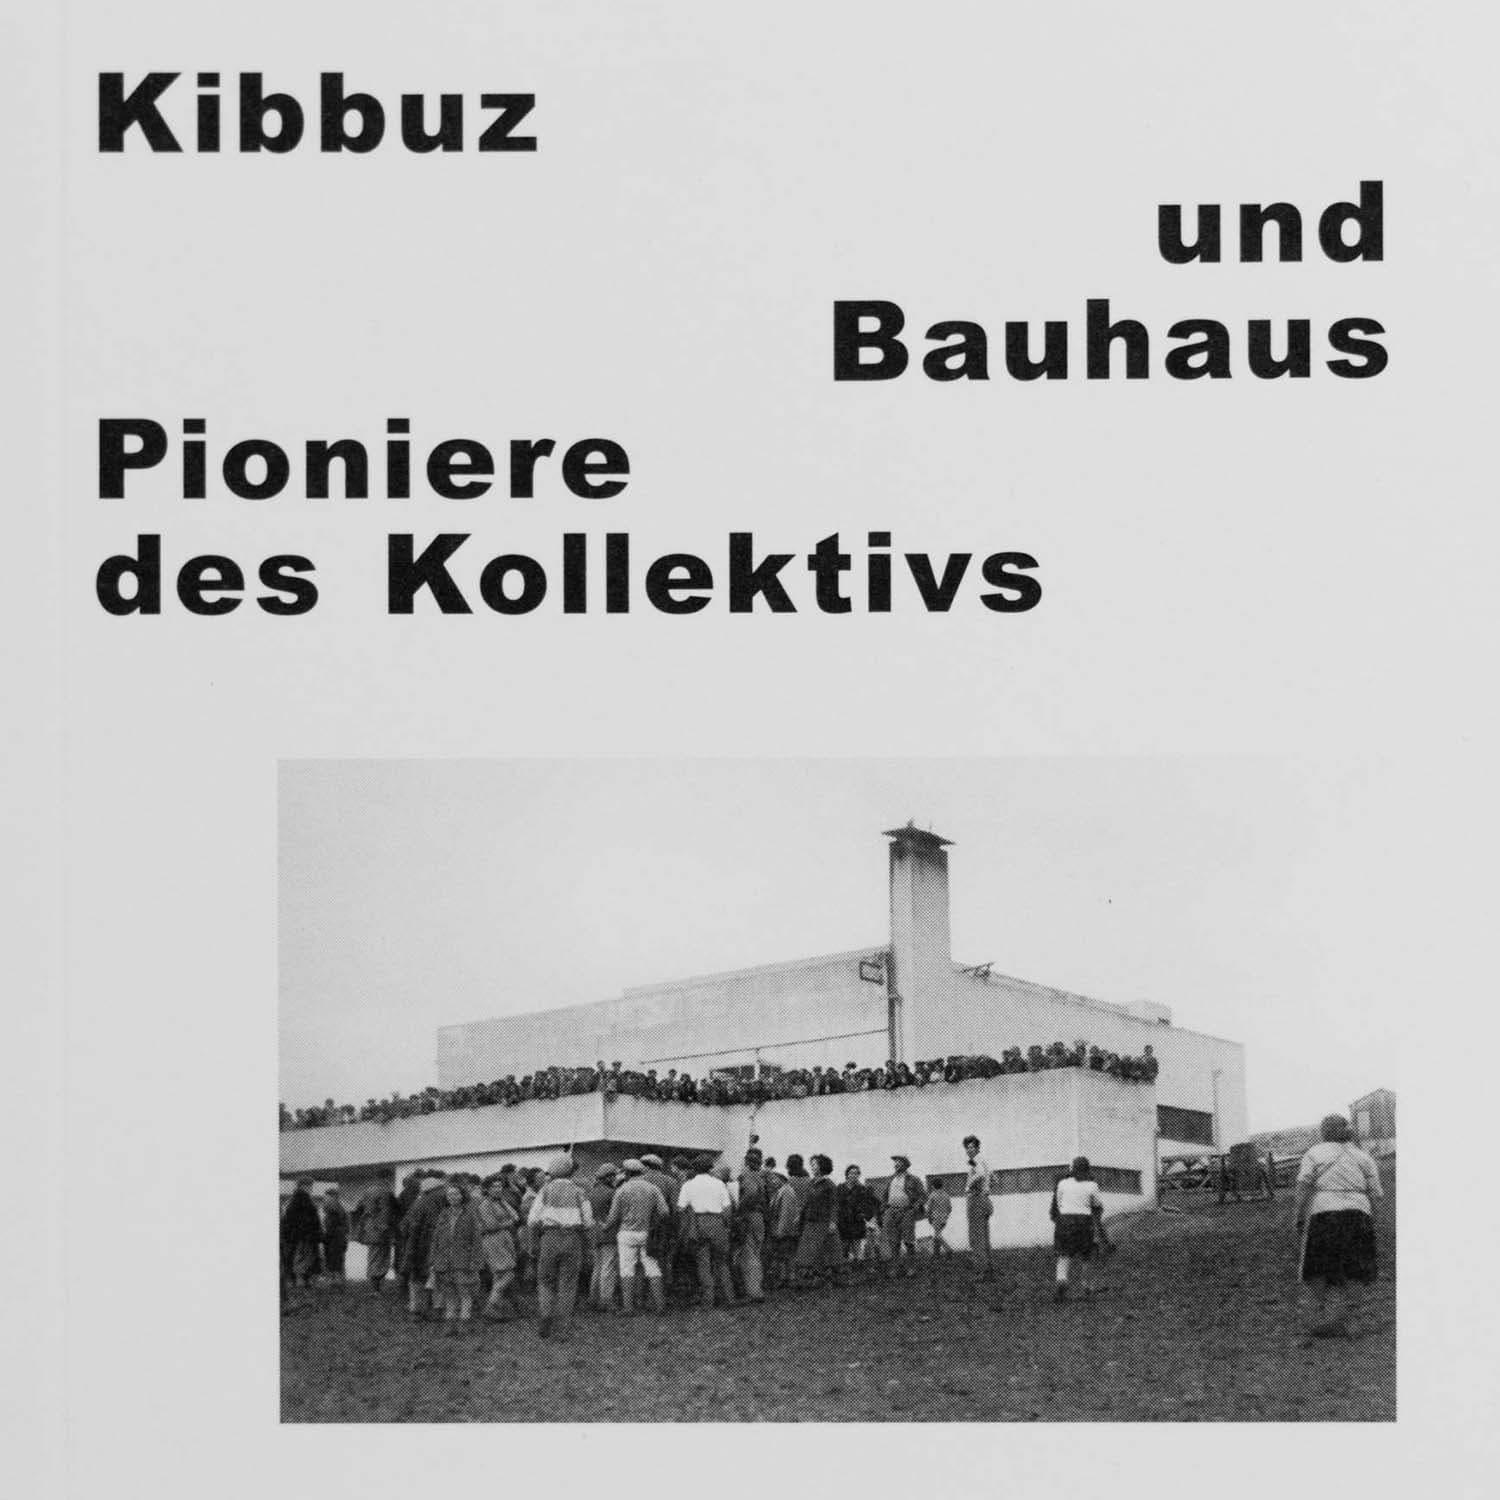 Kibbutz ve Bauhaus resmi